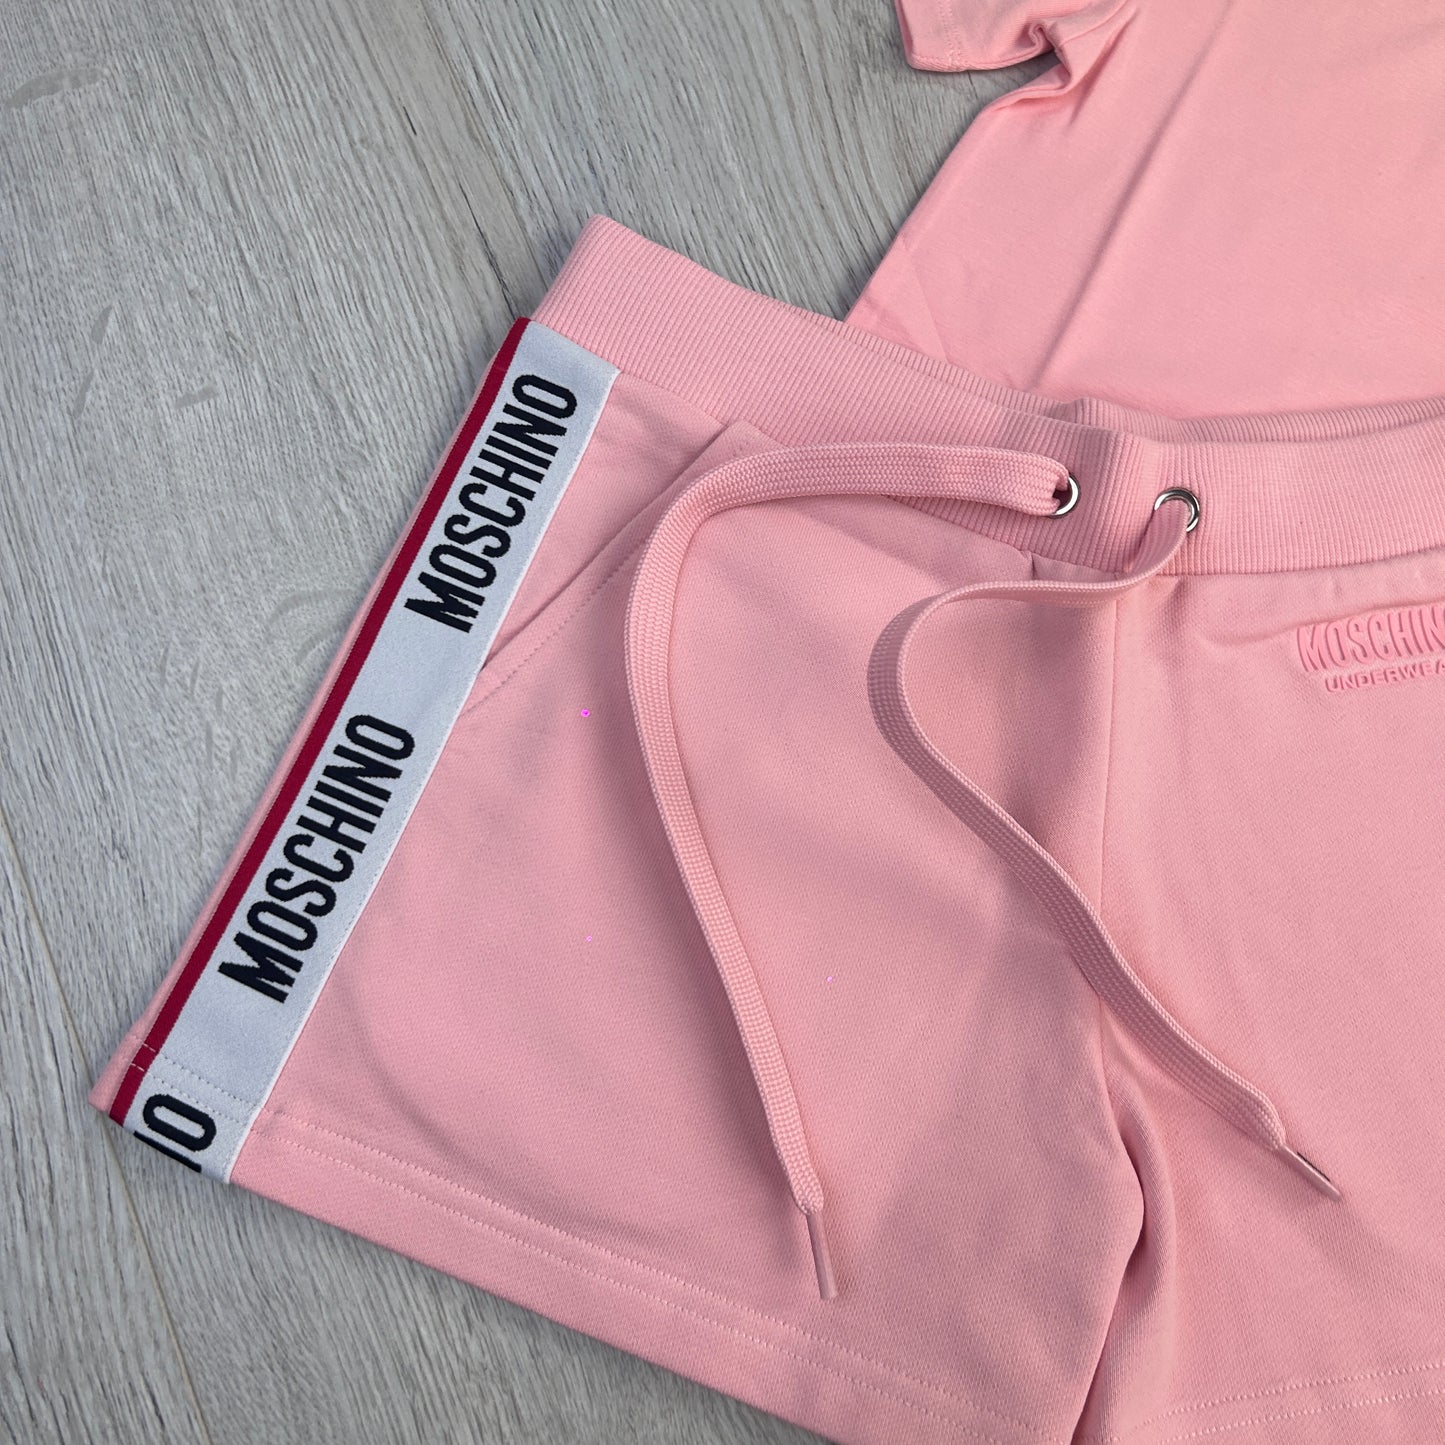 Moschino Women’s Taped Pink T-shirt & Short Set